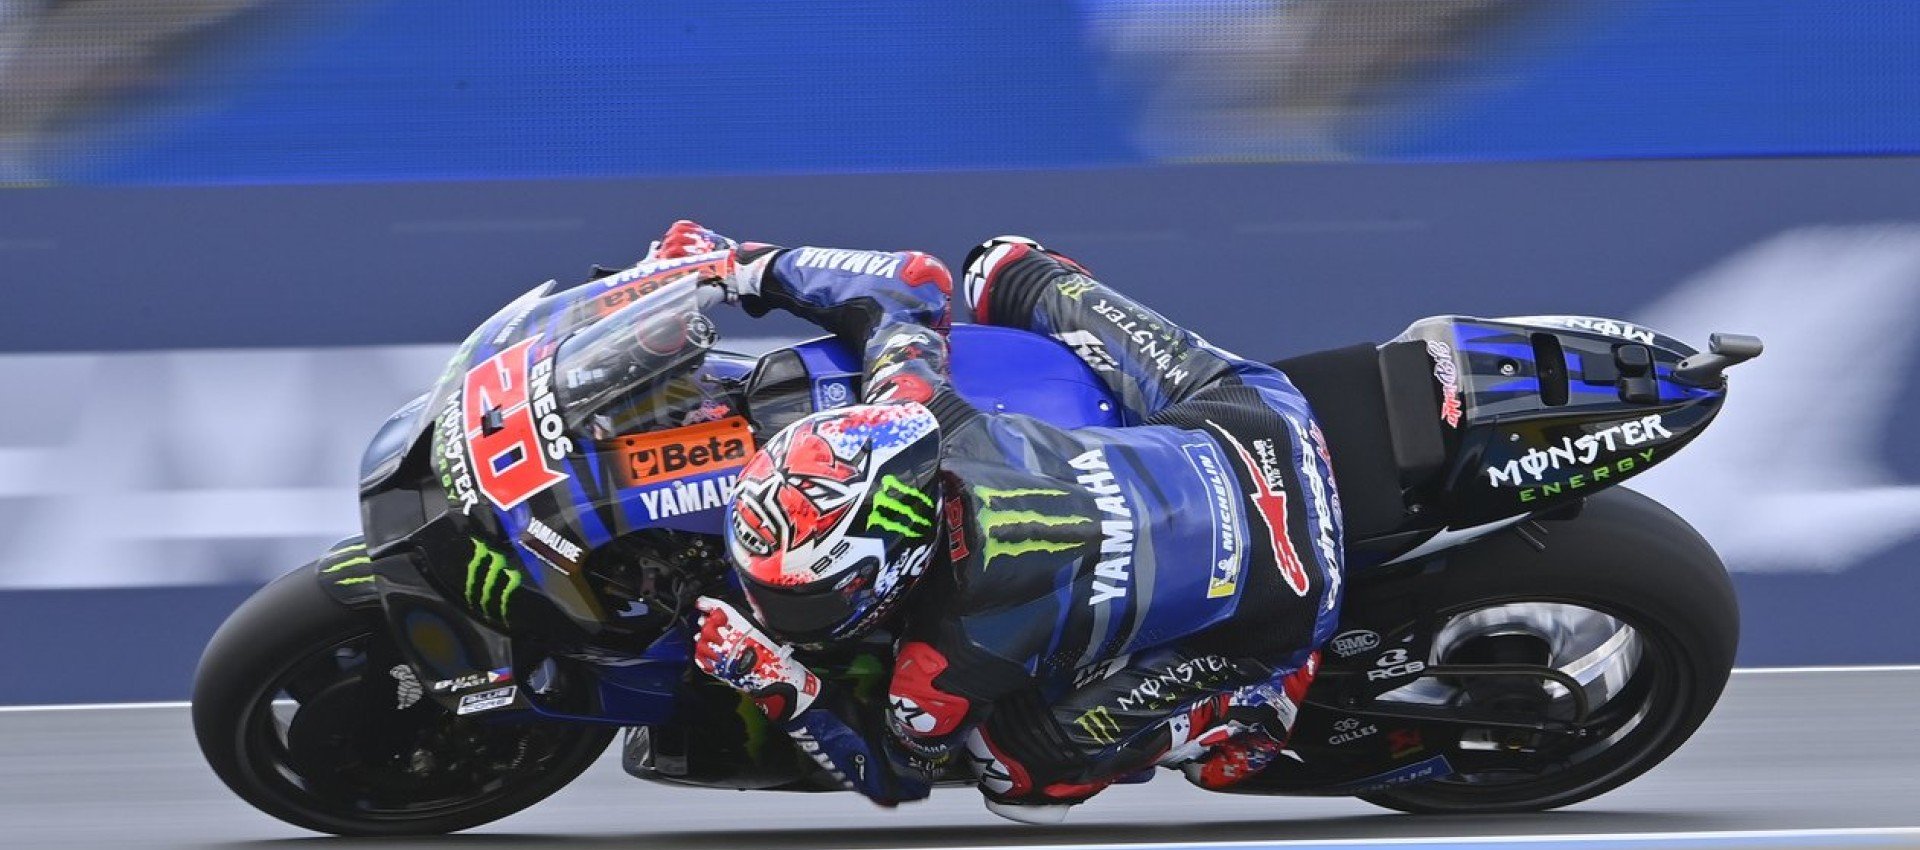 Weekend difficile per Monster Energy Yamaha MotoGP a Le Mans, terminato con una doppia top ten